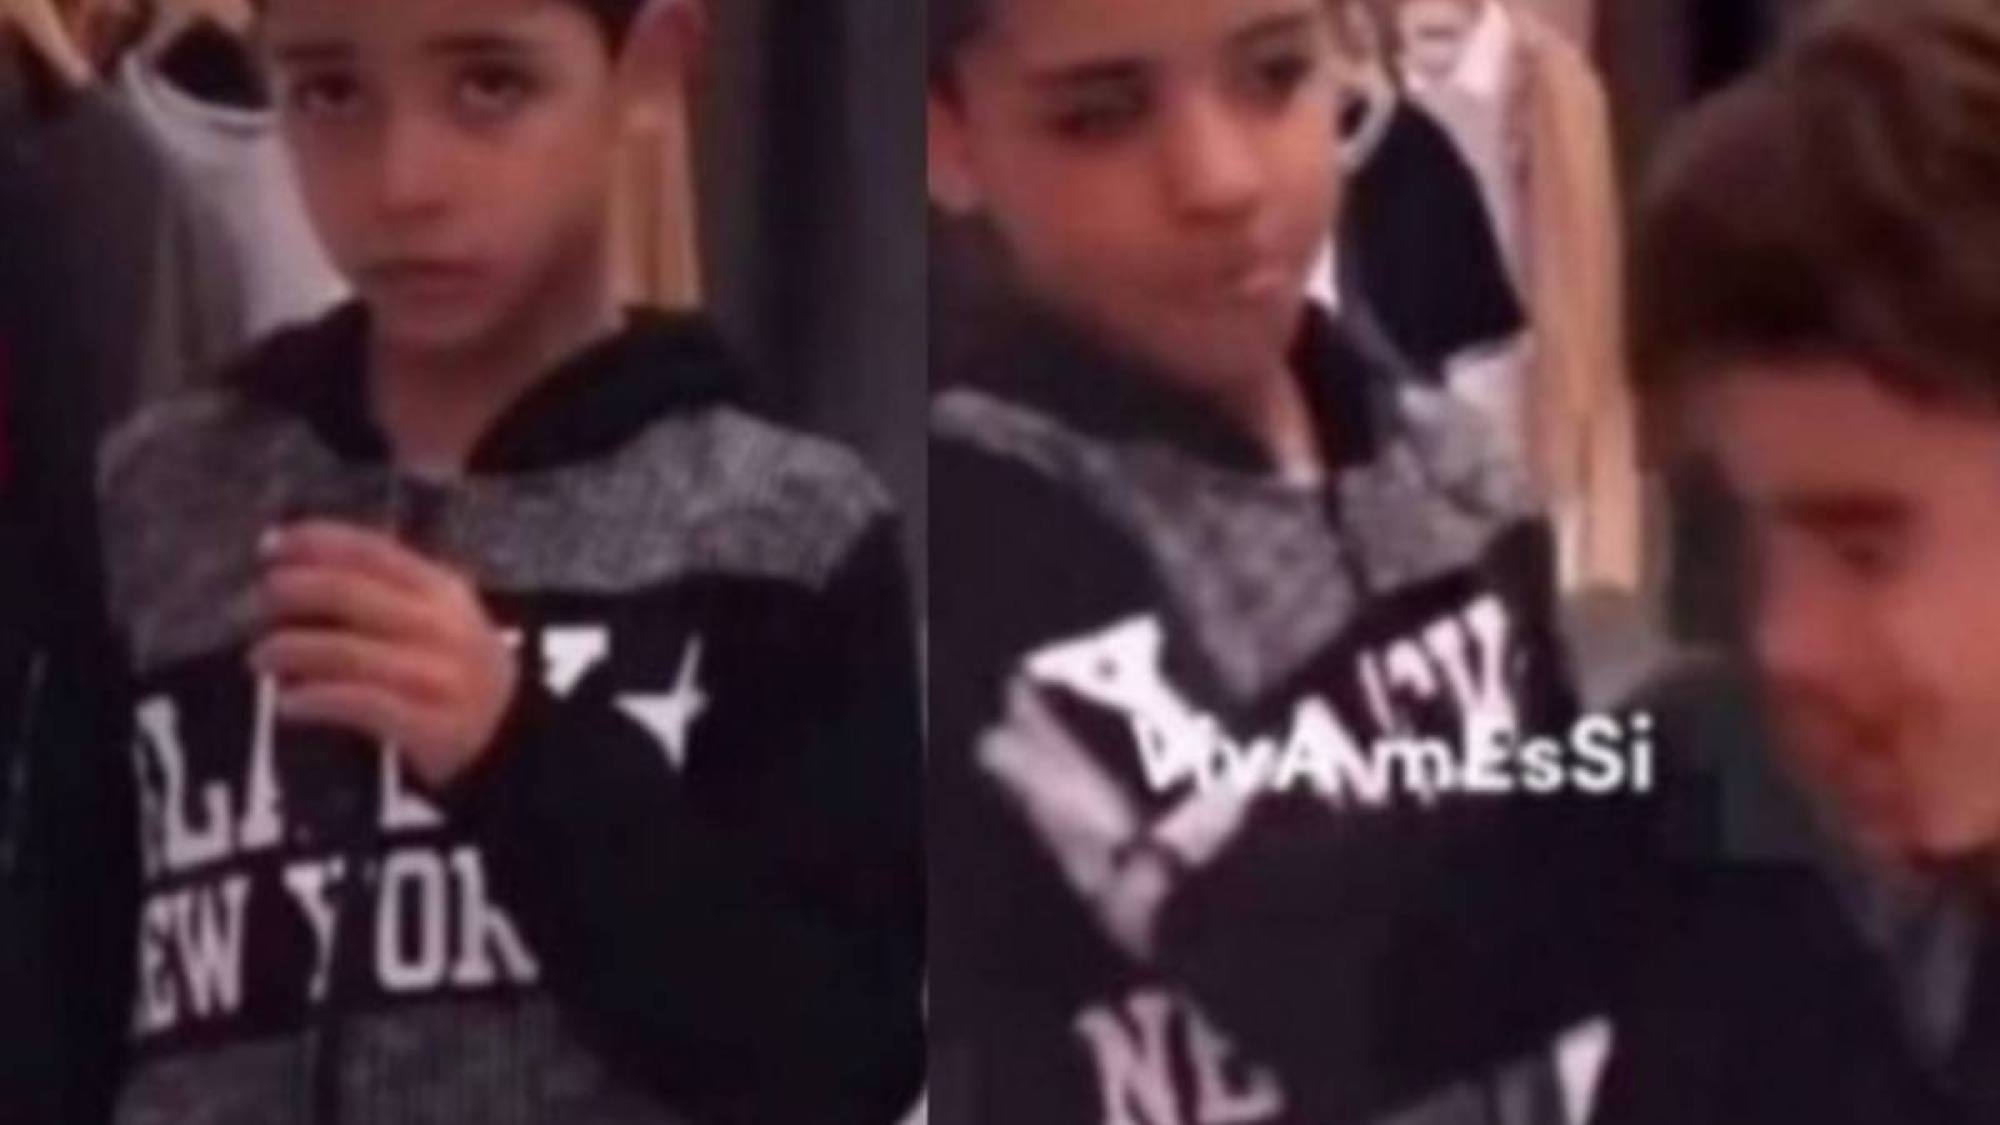 Hijo de Cristiano Ronaldo dio manotazo a niño por gritar ¡viva